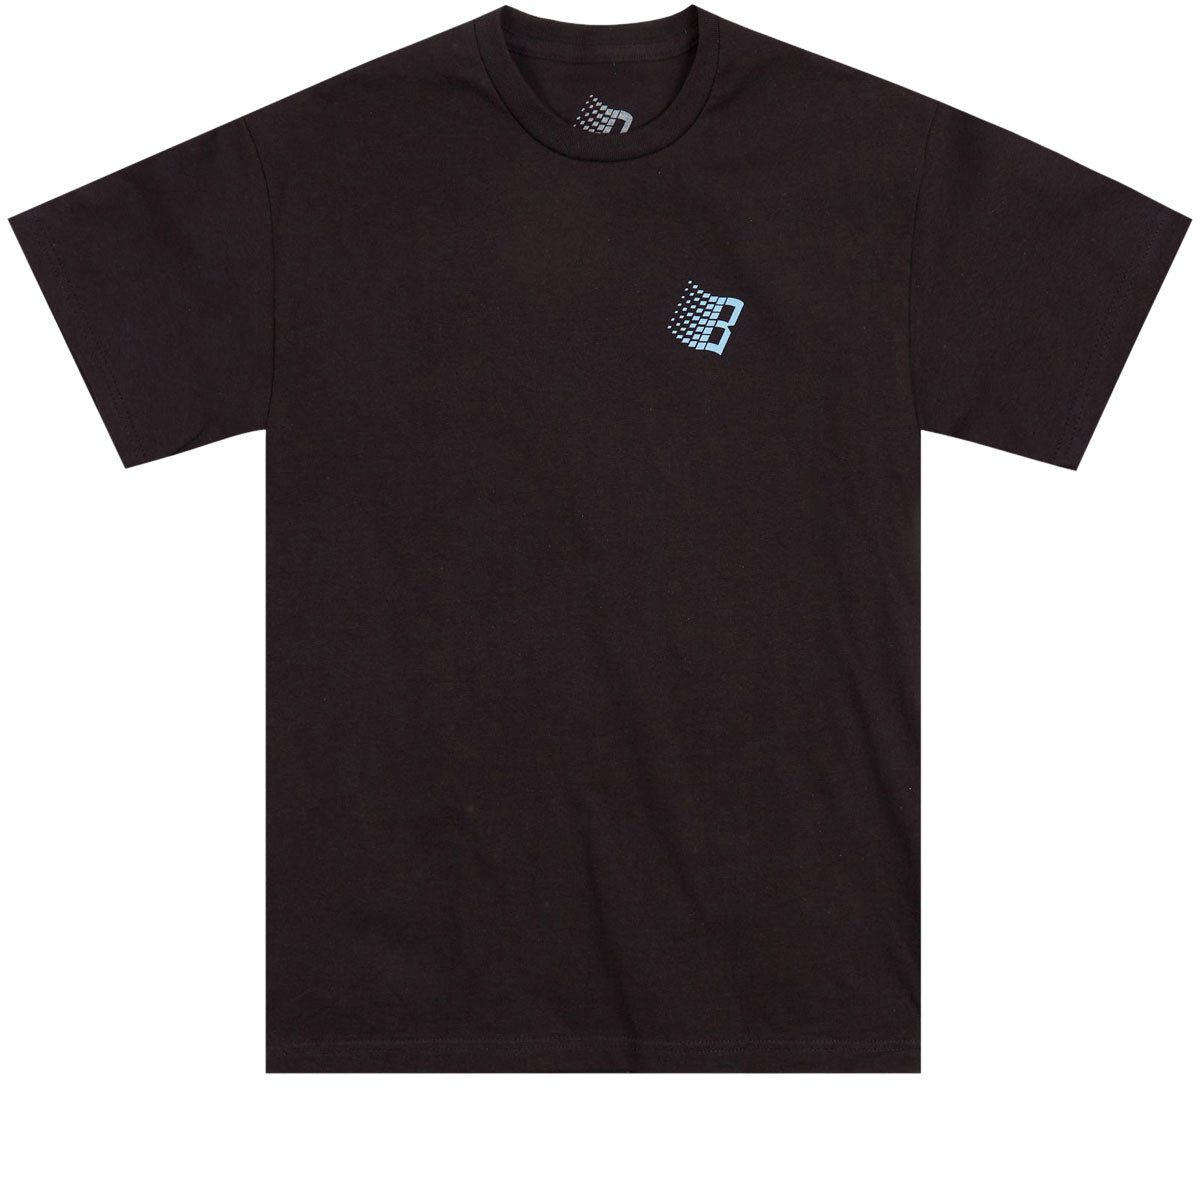 Bronze 56k Balloon Logo T-Shirt - Black image 2